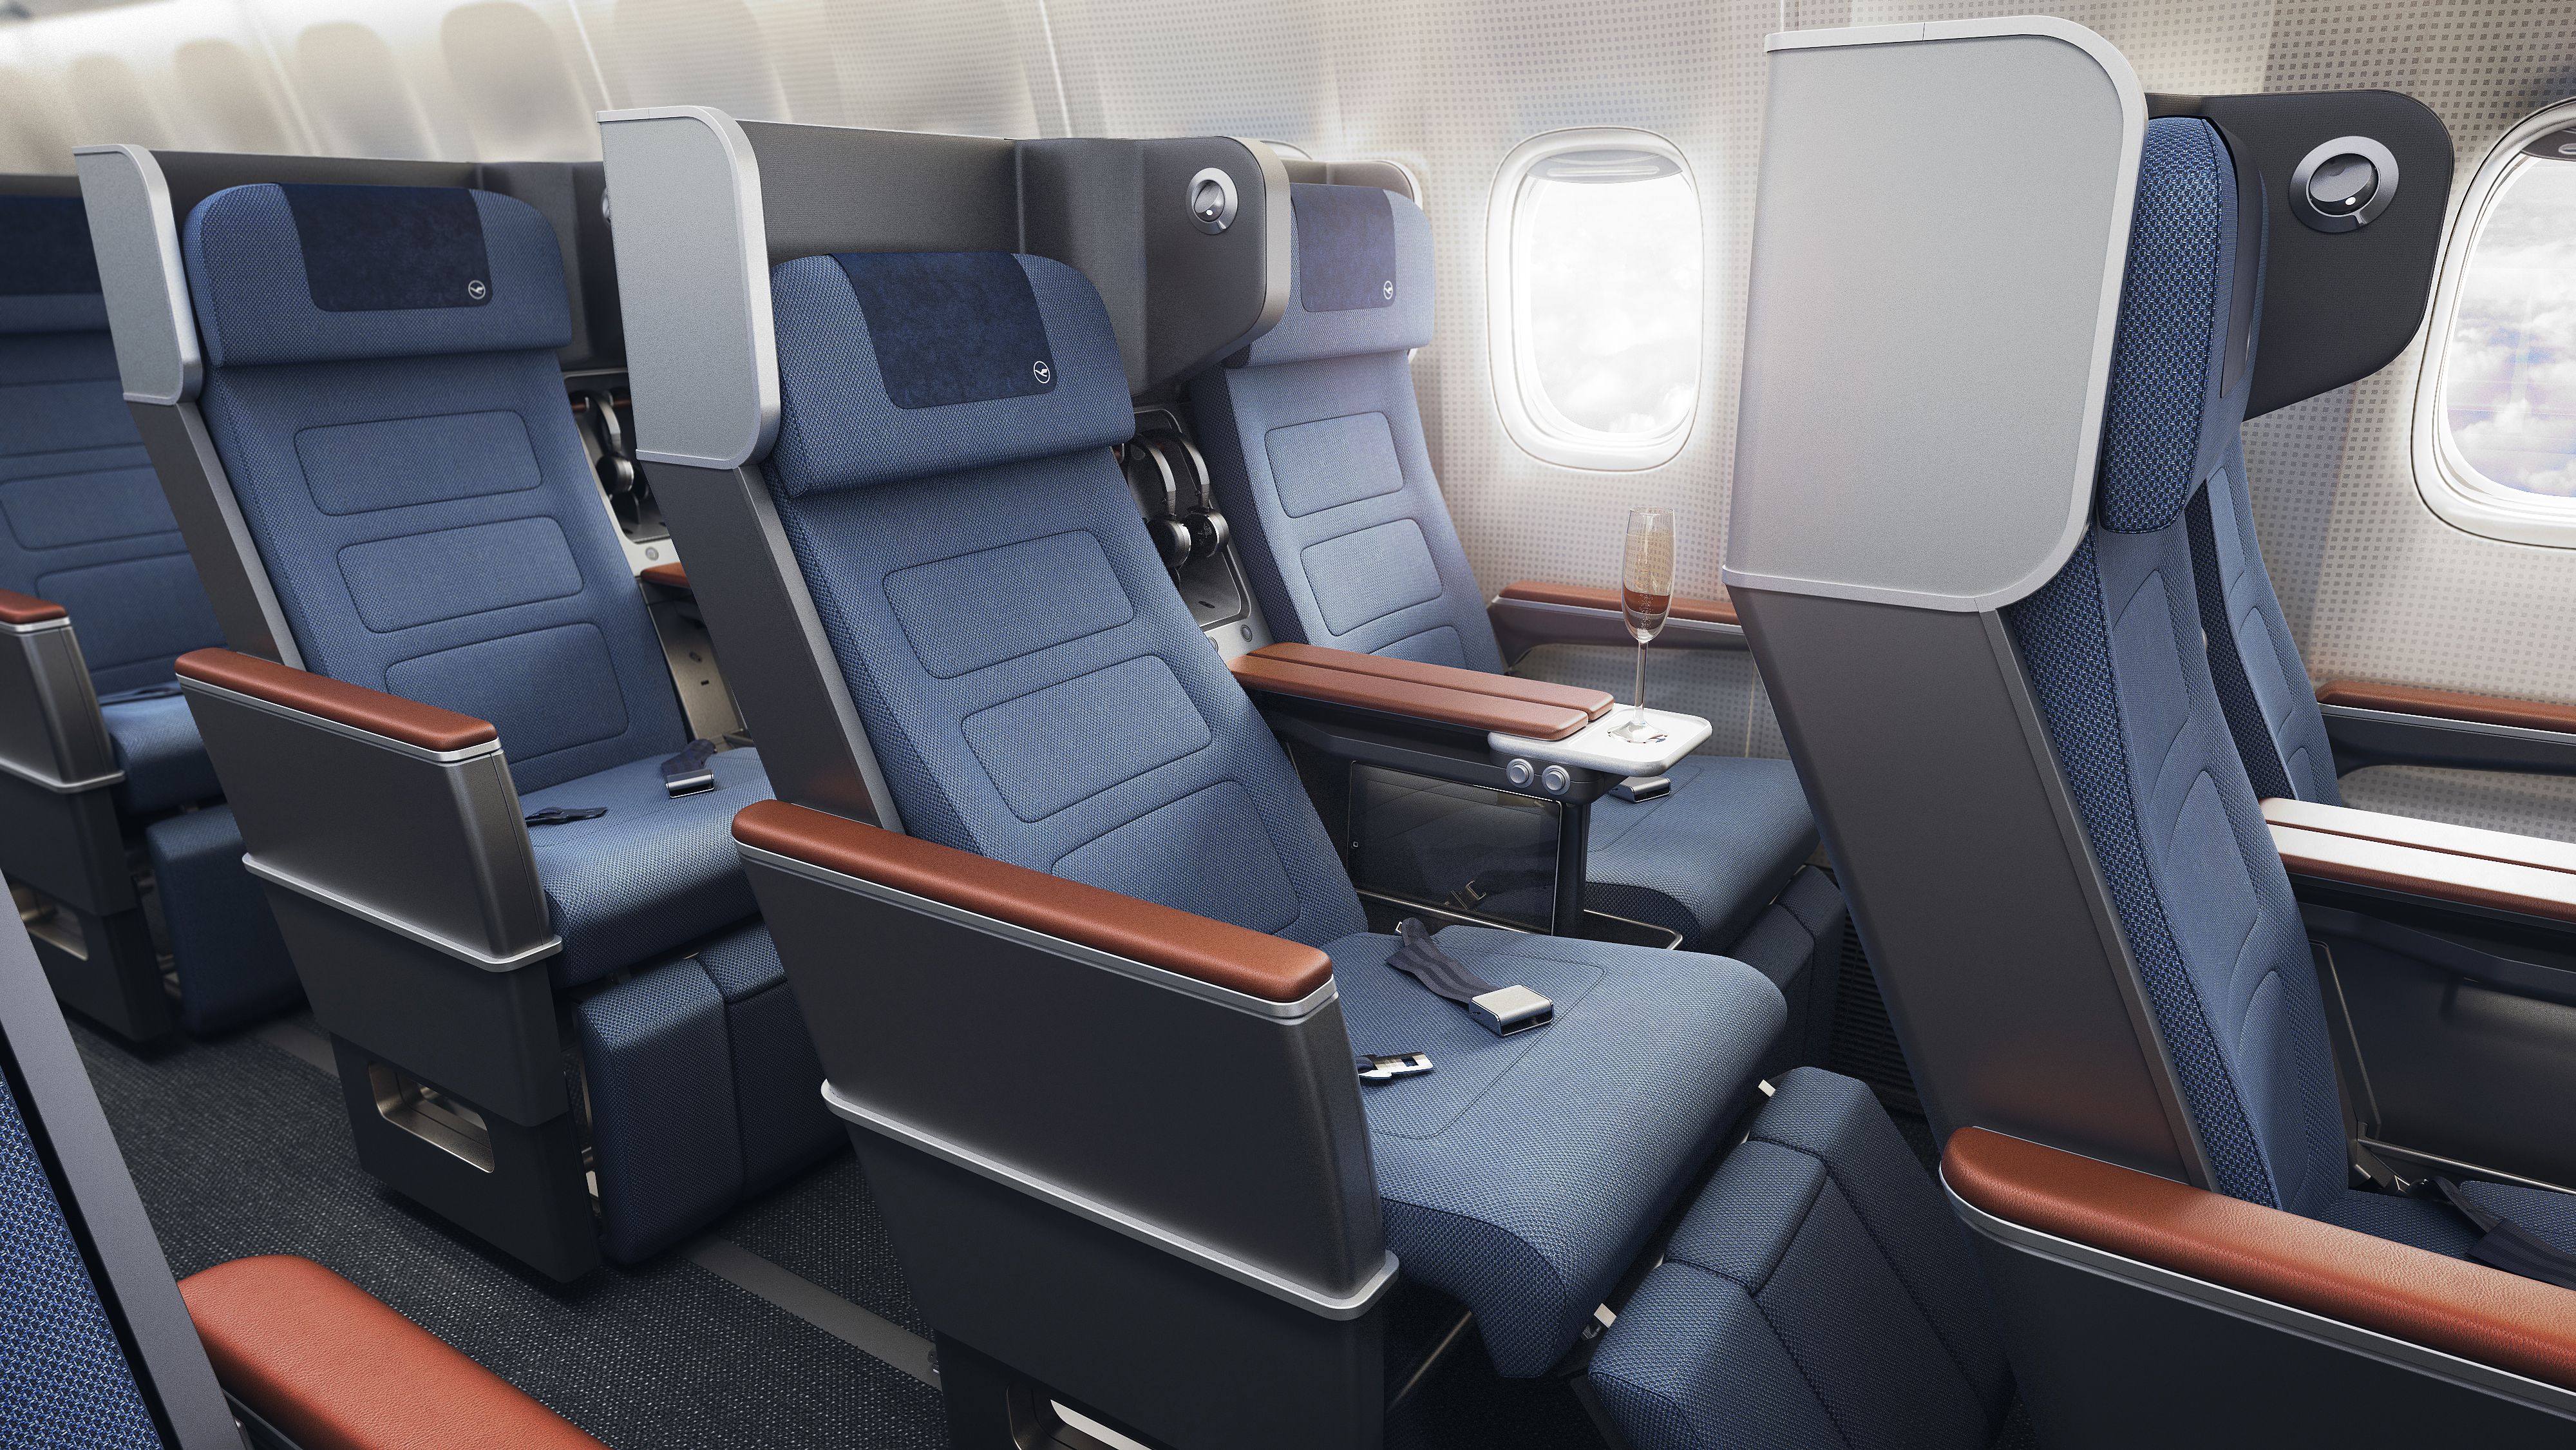 Premium economy Lufthansa hard-shell reclining seats under Allegris programs